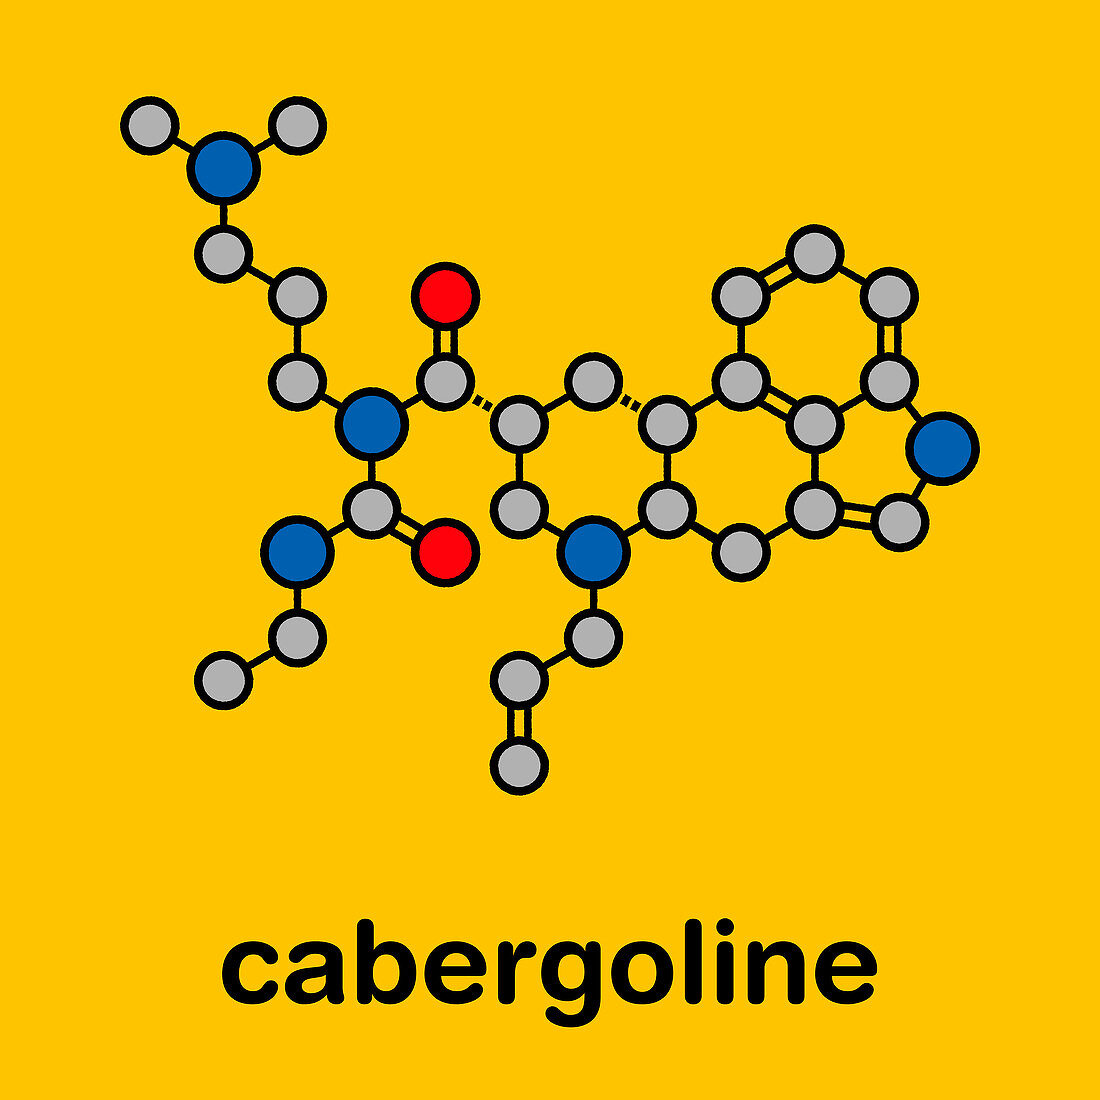 Cabergoline Parkinson's disease drug, molecular model